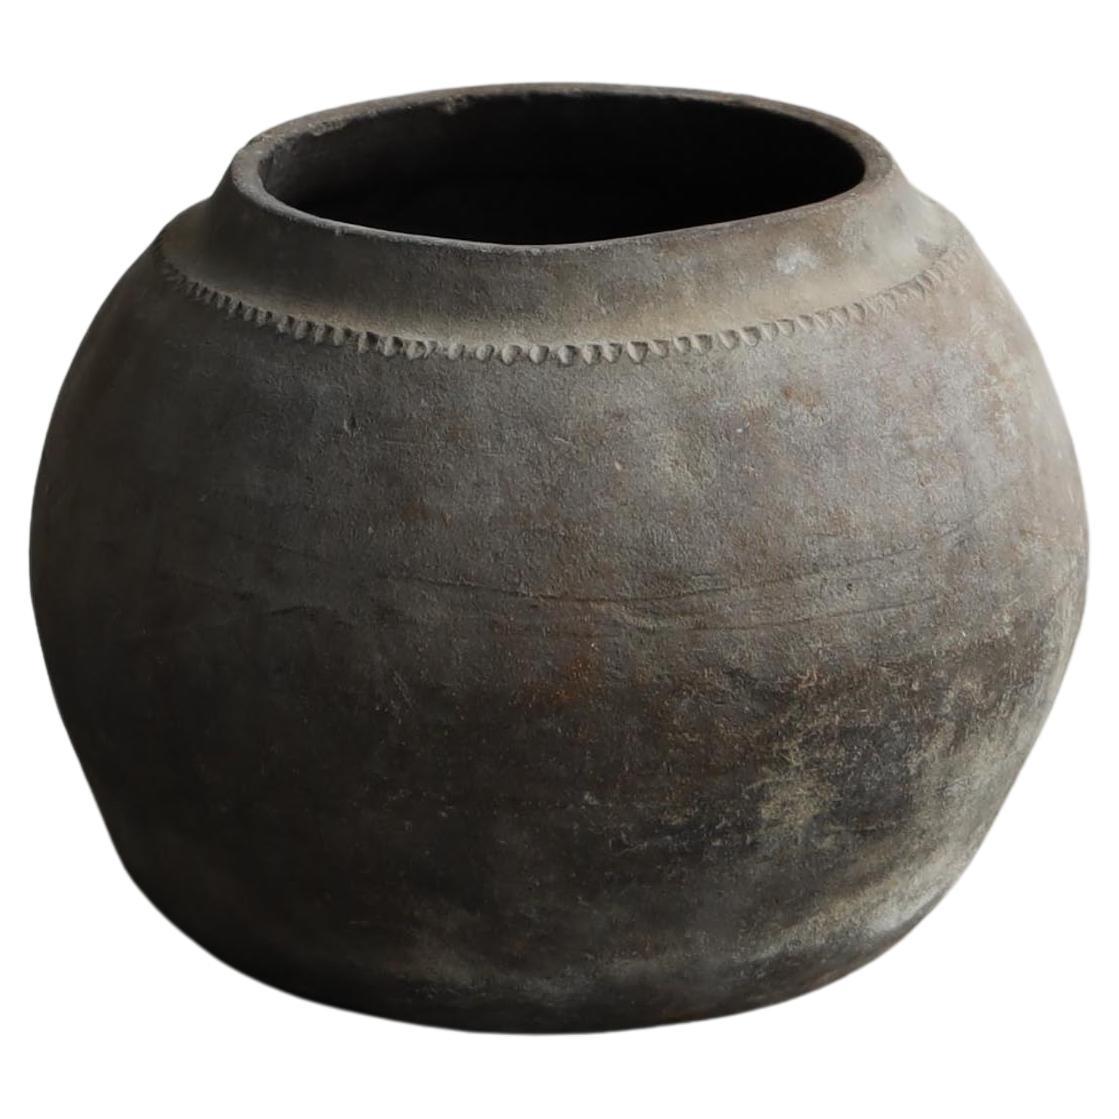 Japanese Wabi-Sabi Small Vase,  Meiji Period 1750-1850